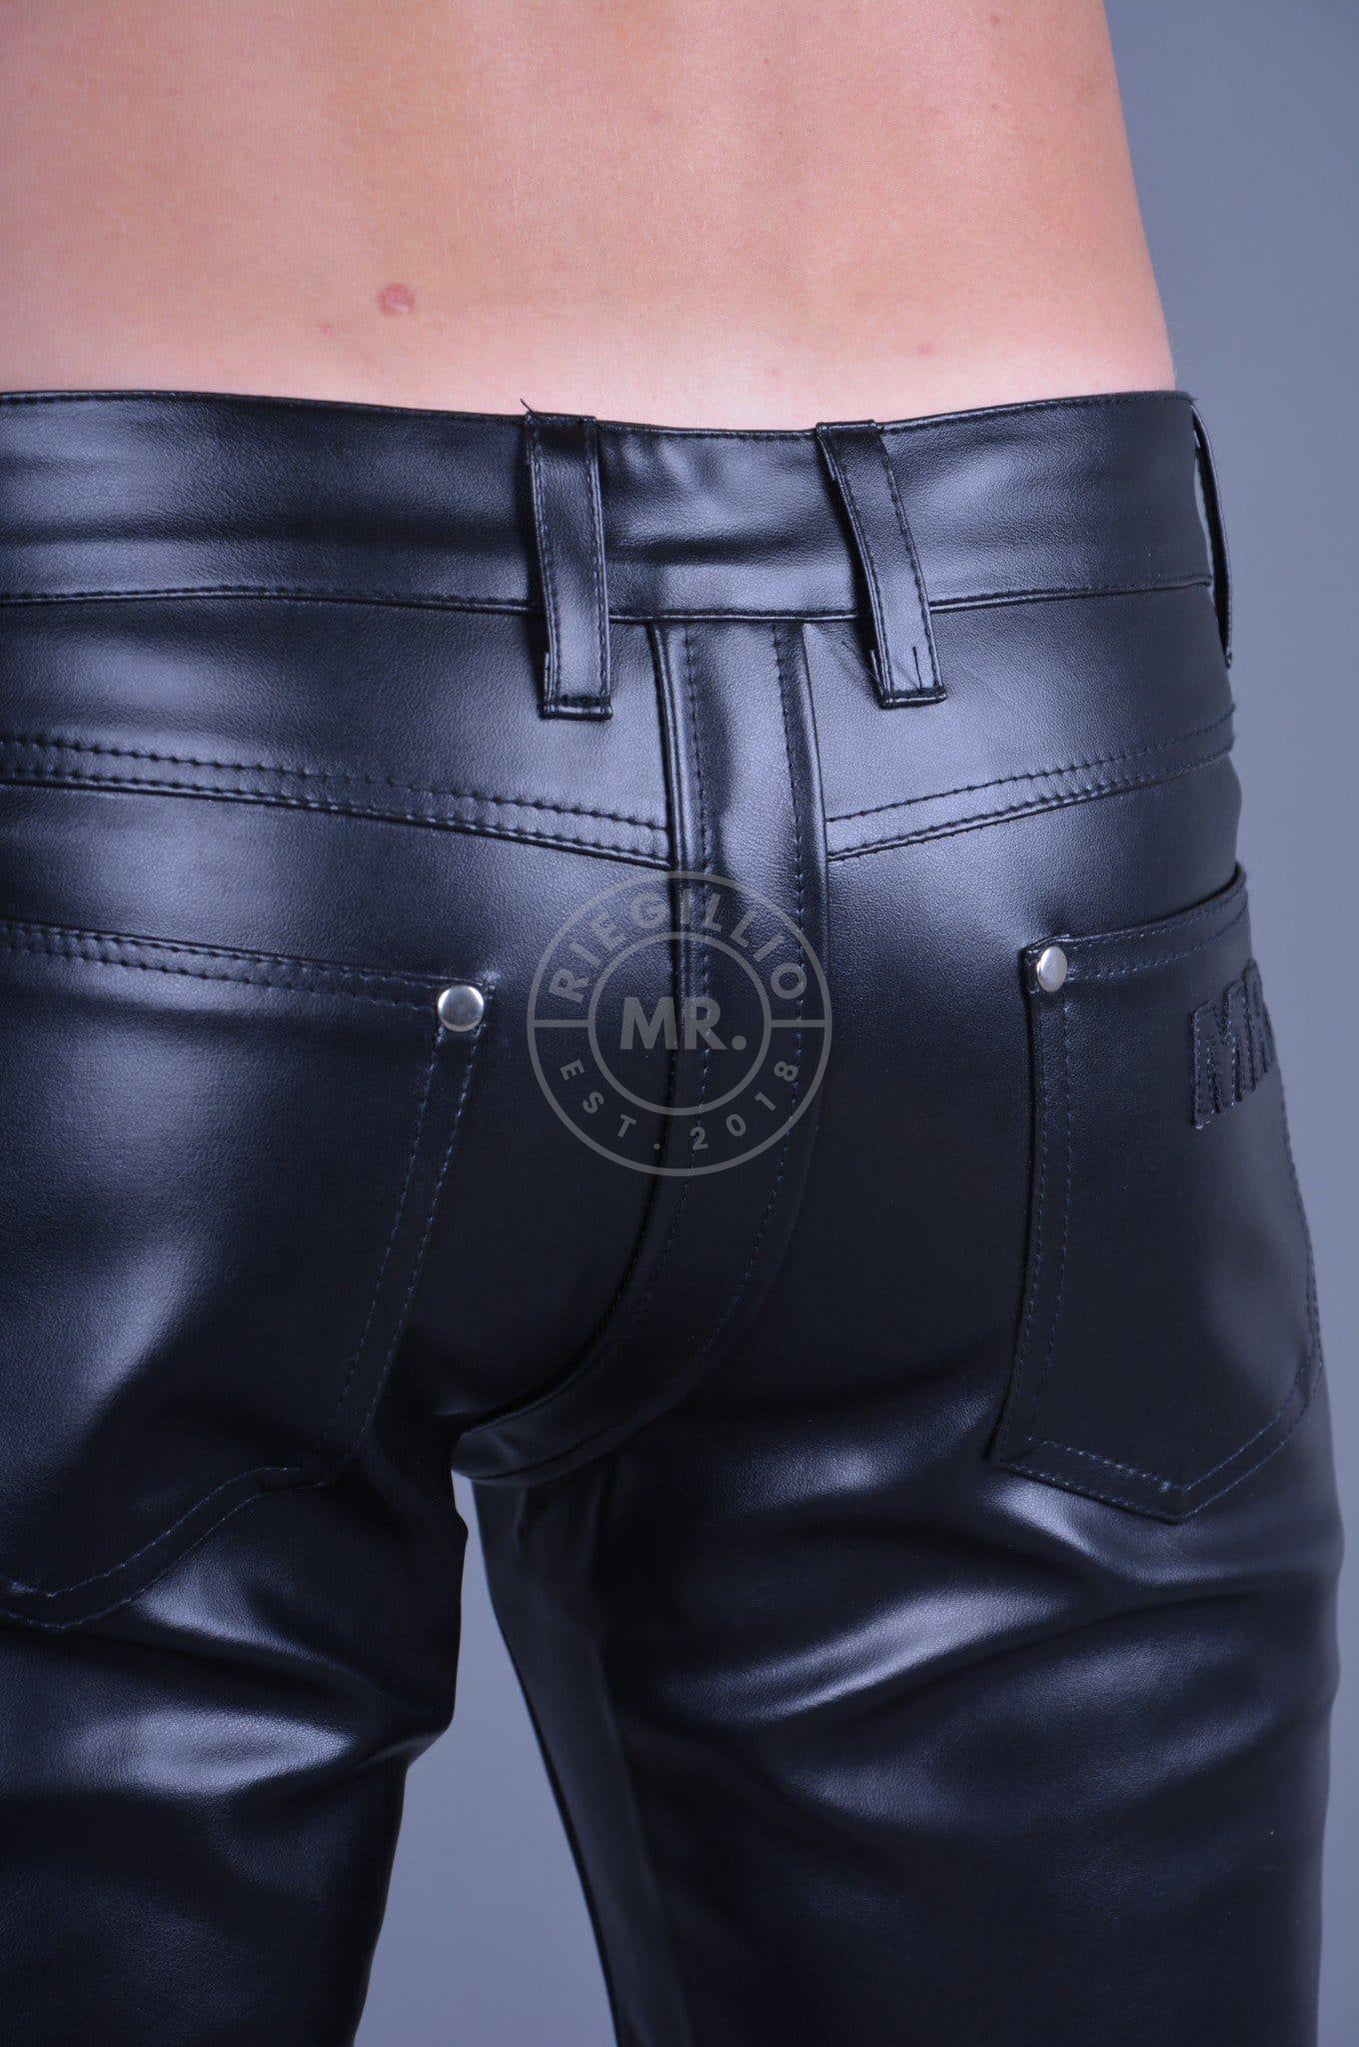 MR. 5-Pocket Pants Invisible Thru Zip at MR. Riegillio